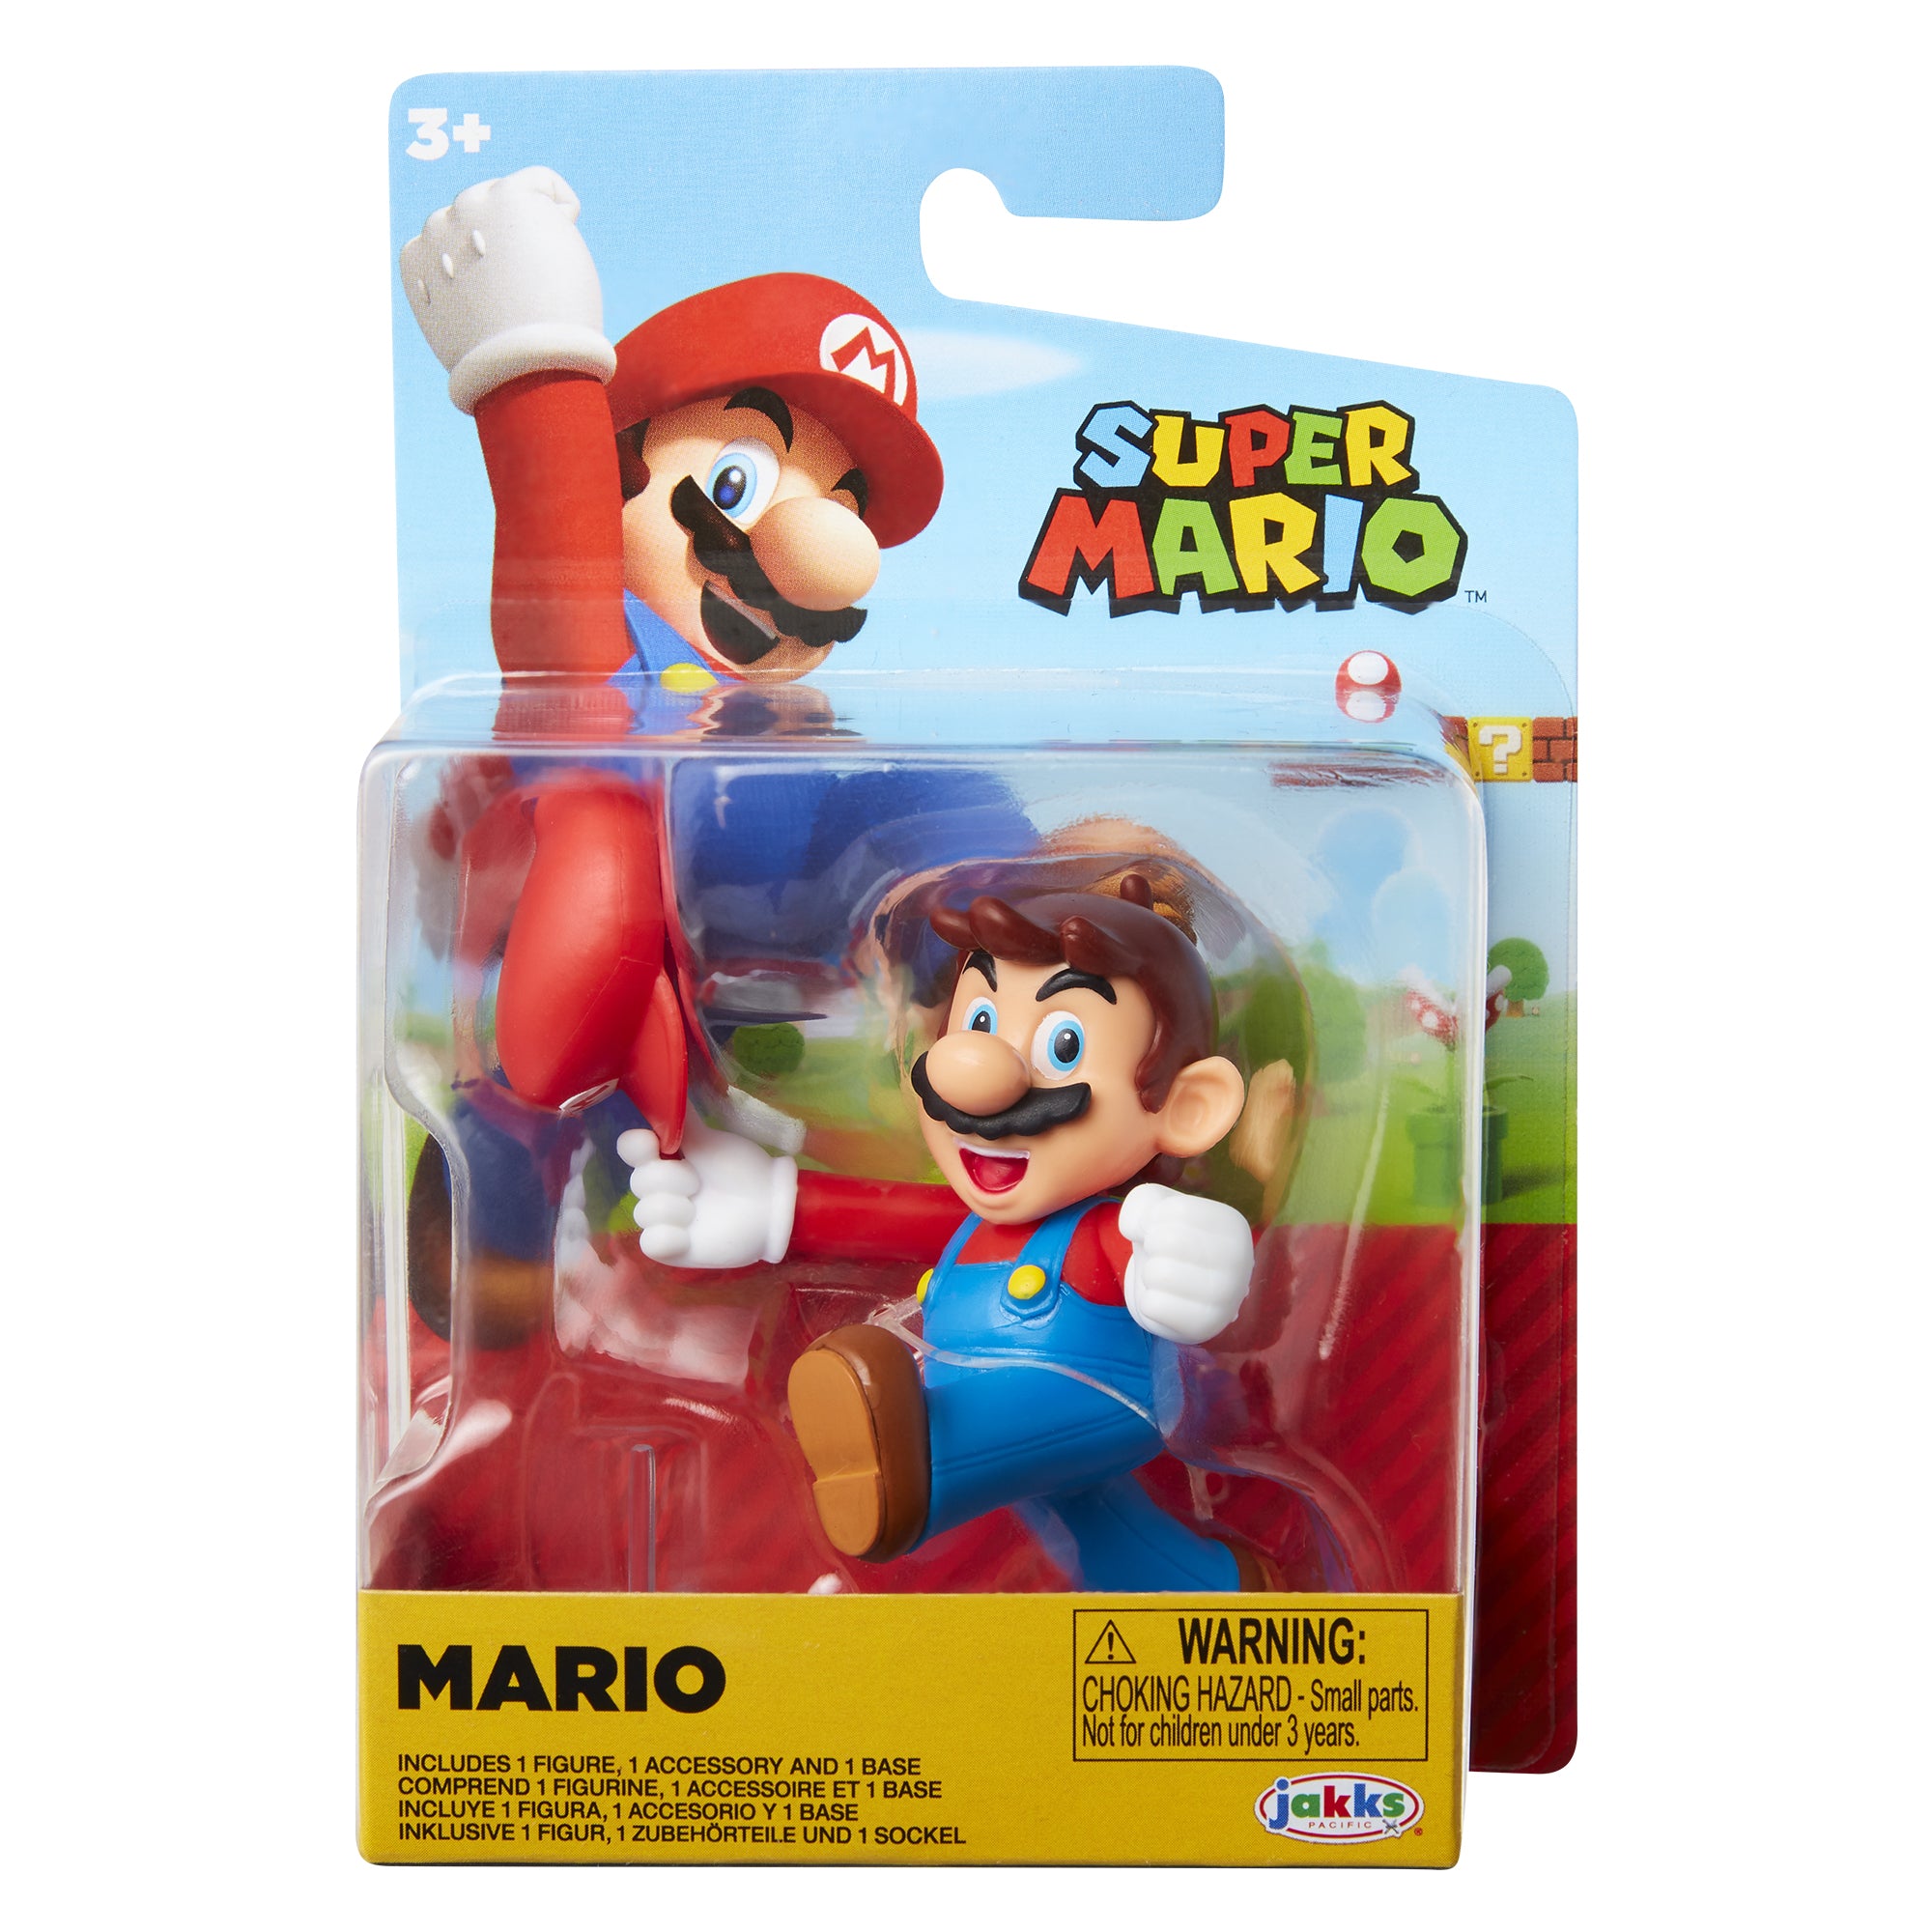 Nintendo Jakks Pacific - Super Mario Odyssey - Pack 3 Figurines